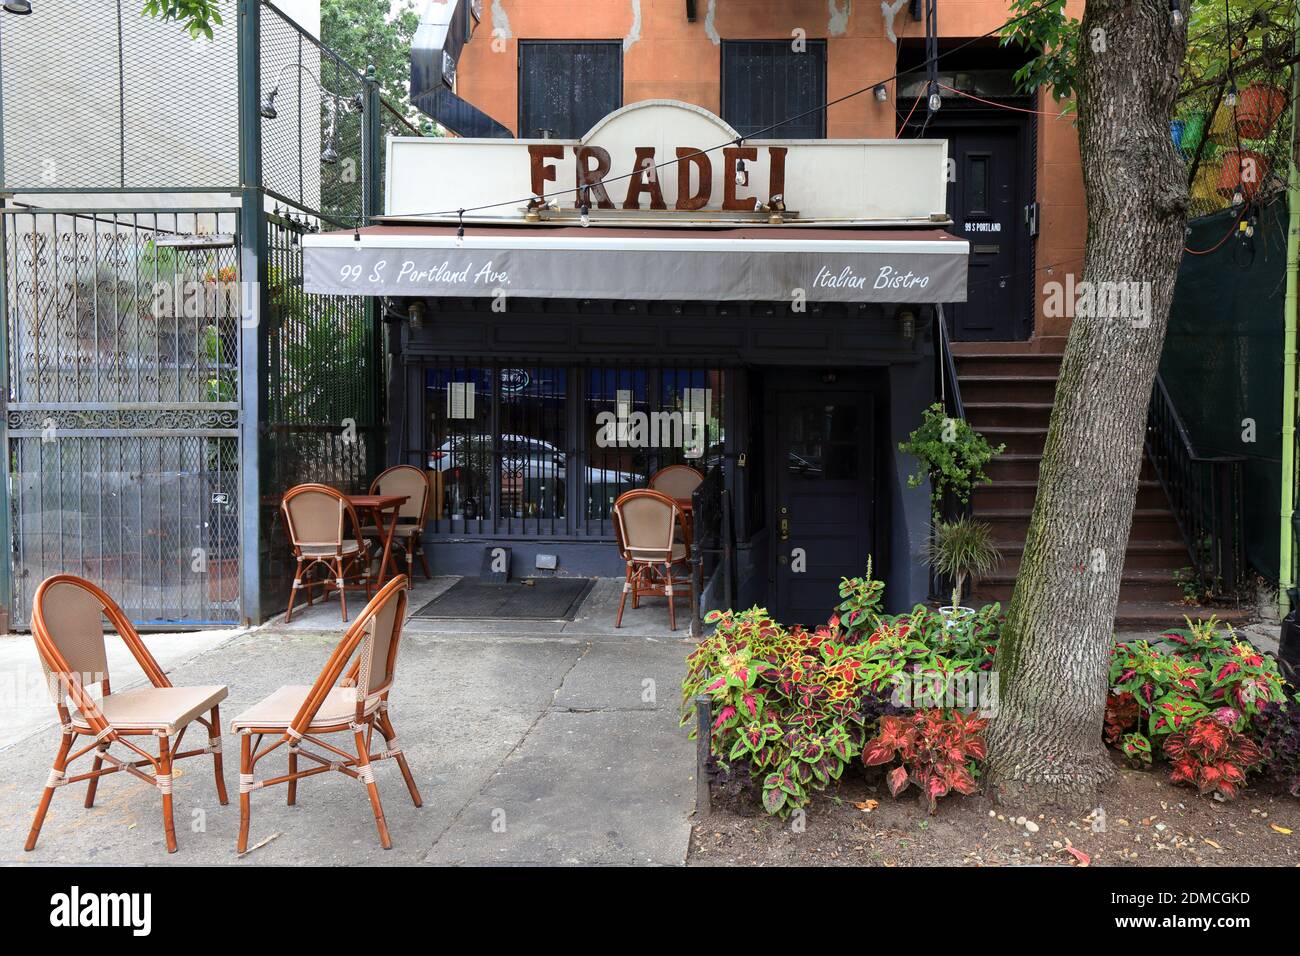 Fradei Bistro, 99 S Portland Ave, Brooklyn, NY. Façade extérieure d'un restaurant italien dans le quartier de fort Greene. Banque D'Images